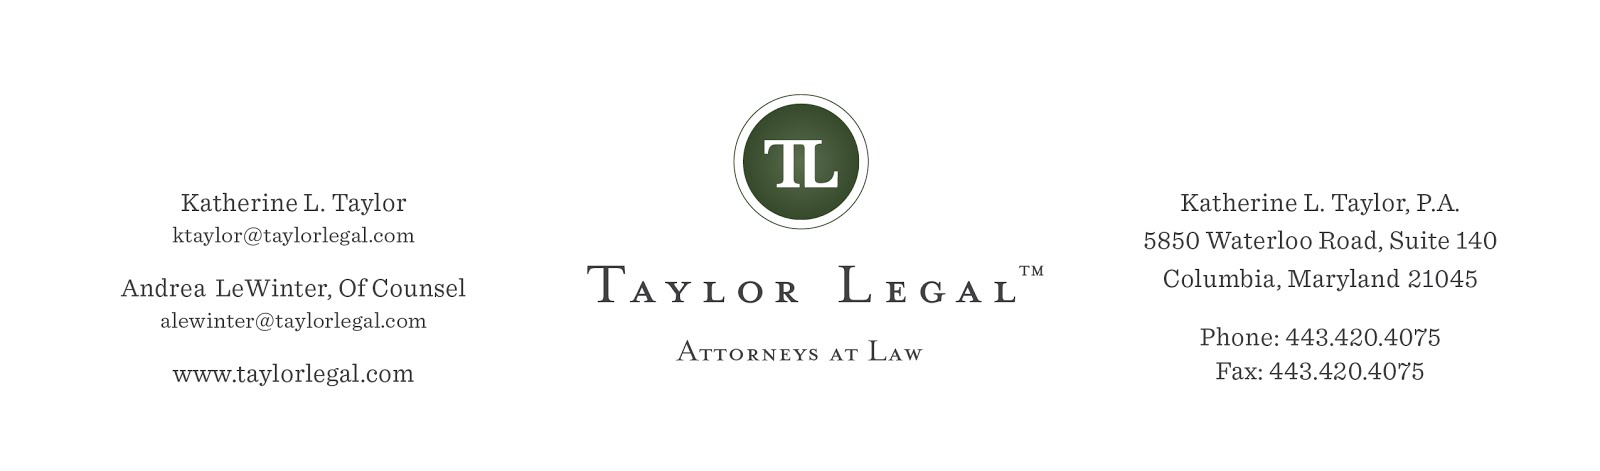 Taylor Legal™